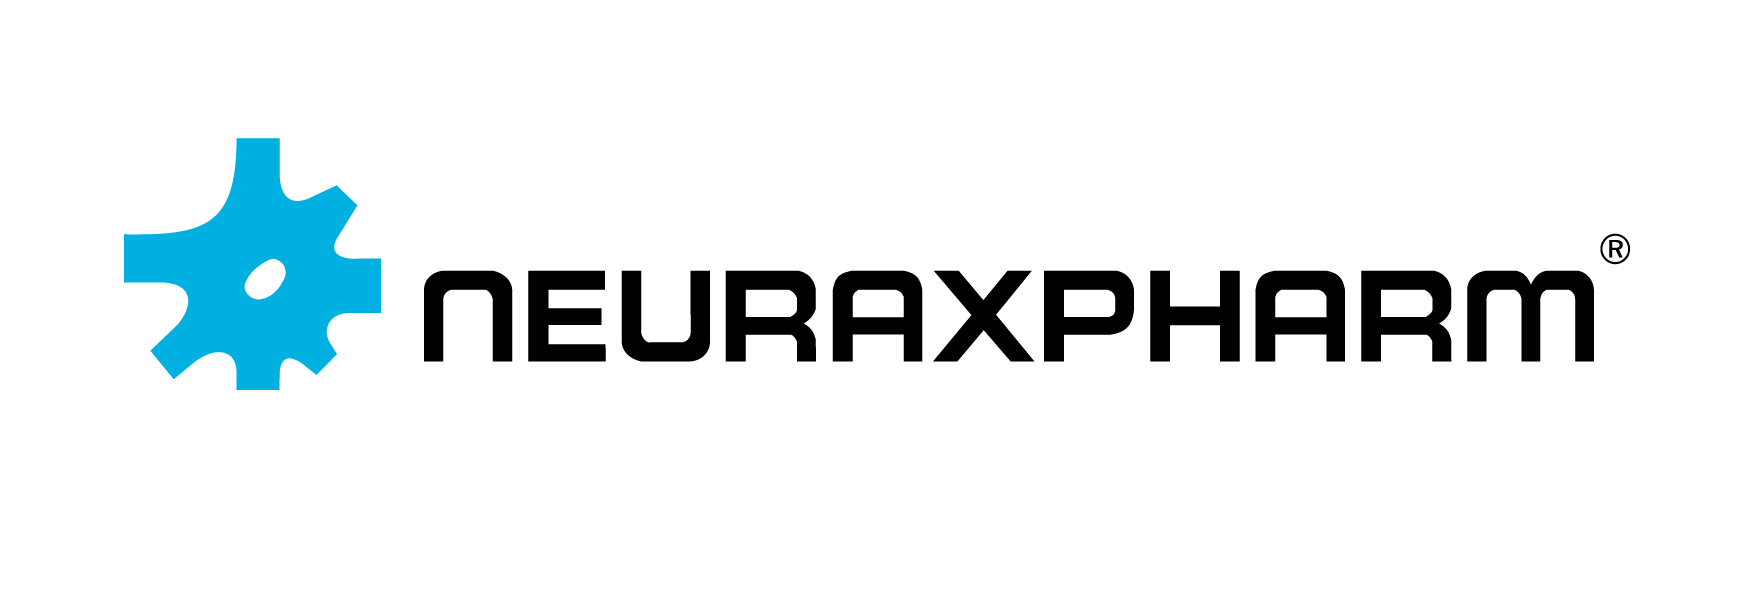 logo neuraxpharm